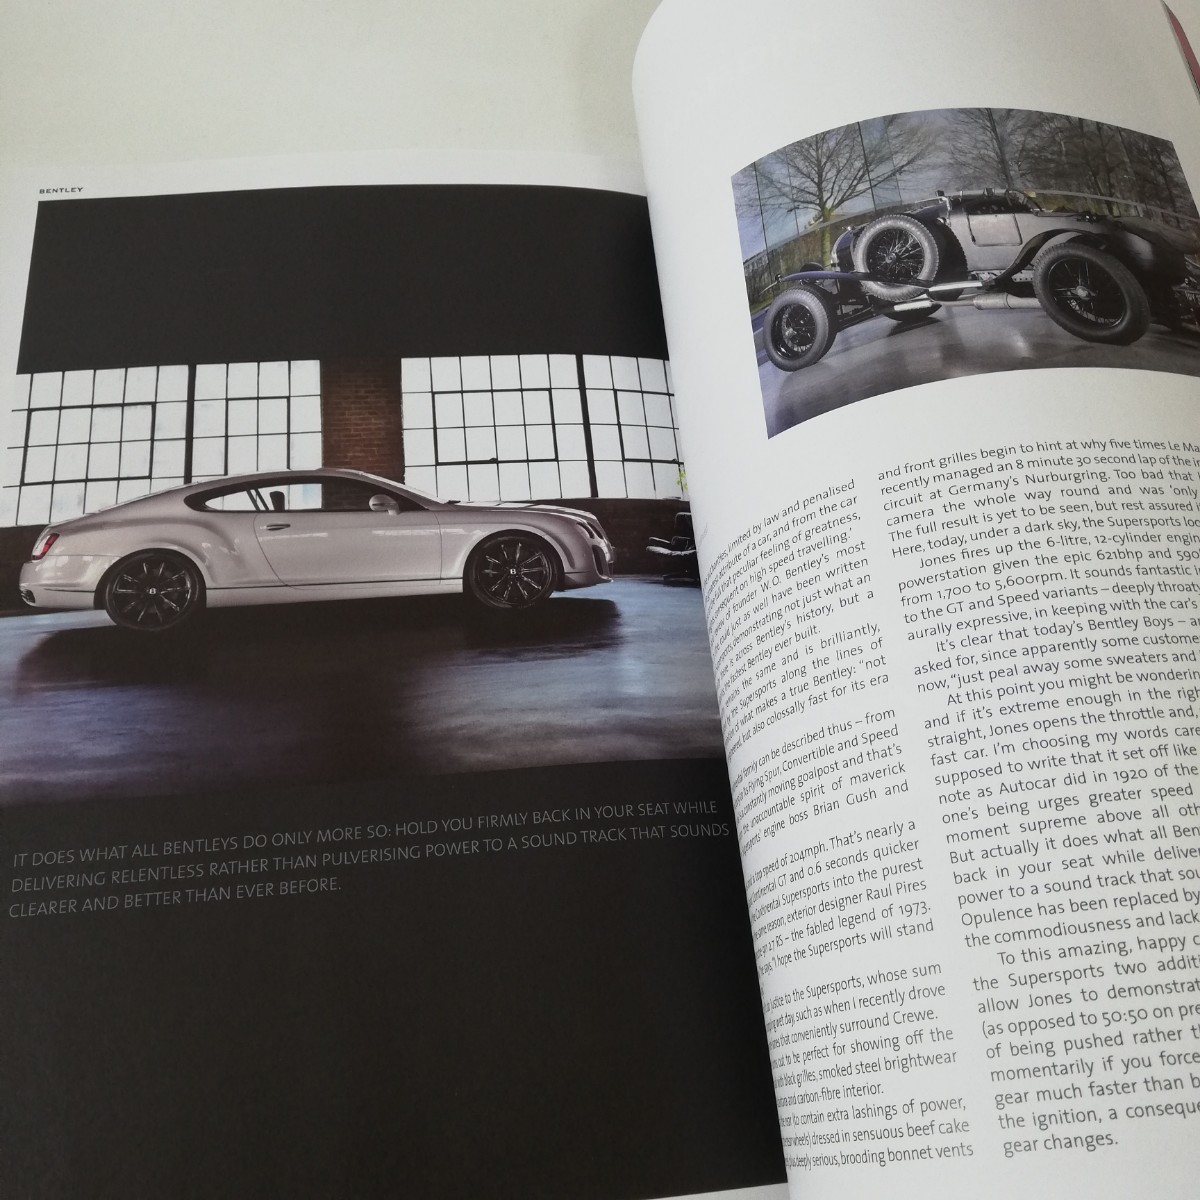 THE OFFICIAL BENTLEY MAGAZINE No.33 SPRING 2010 не продается официальный Bentley журнал Continental GT super sport 